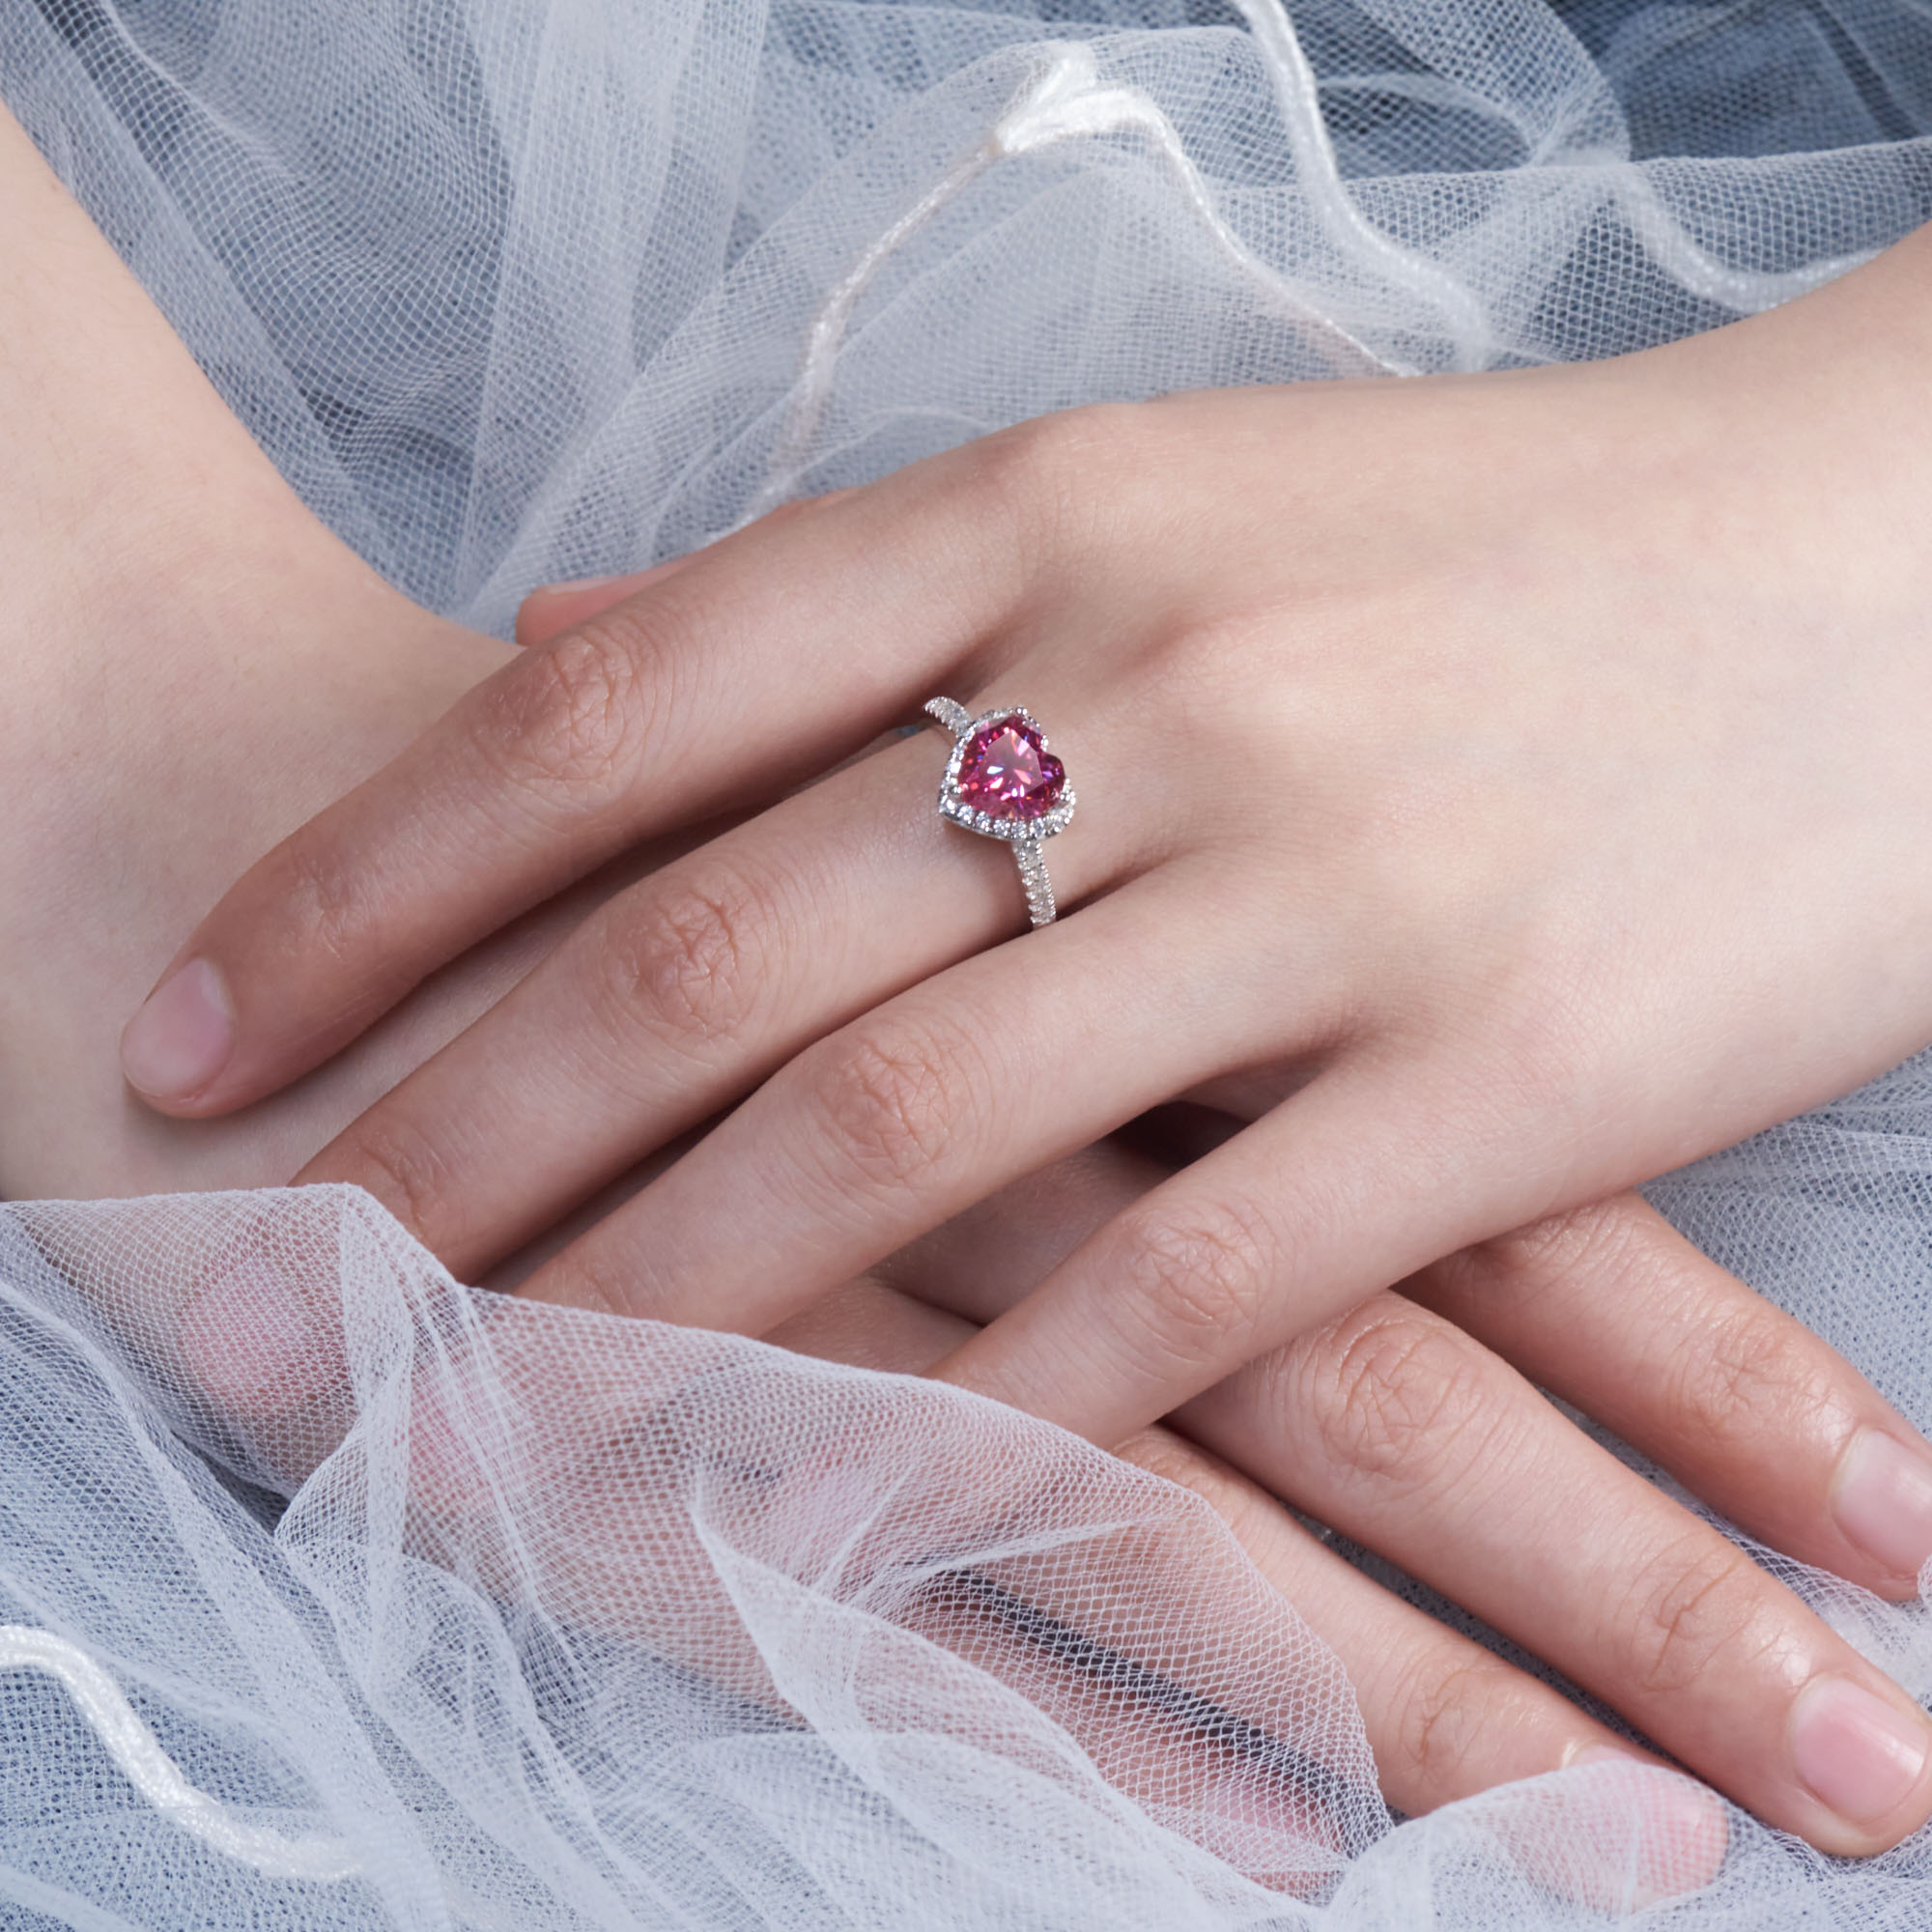 GIGAJEWE Moissanite 2.0ct 8.0mm Pink Color VVS1 Heart Cut 925 Silver Ring Diamond Test Passed Fashion Woman Girlfriend Gift